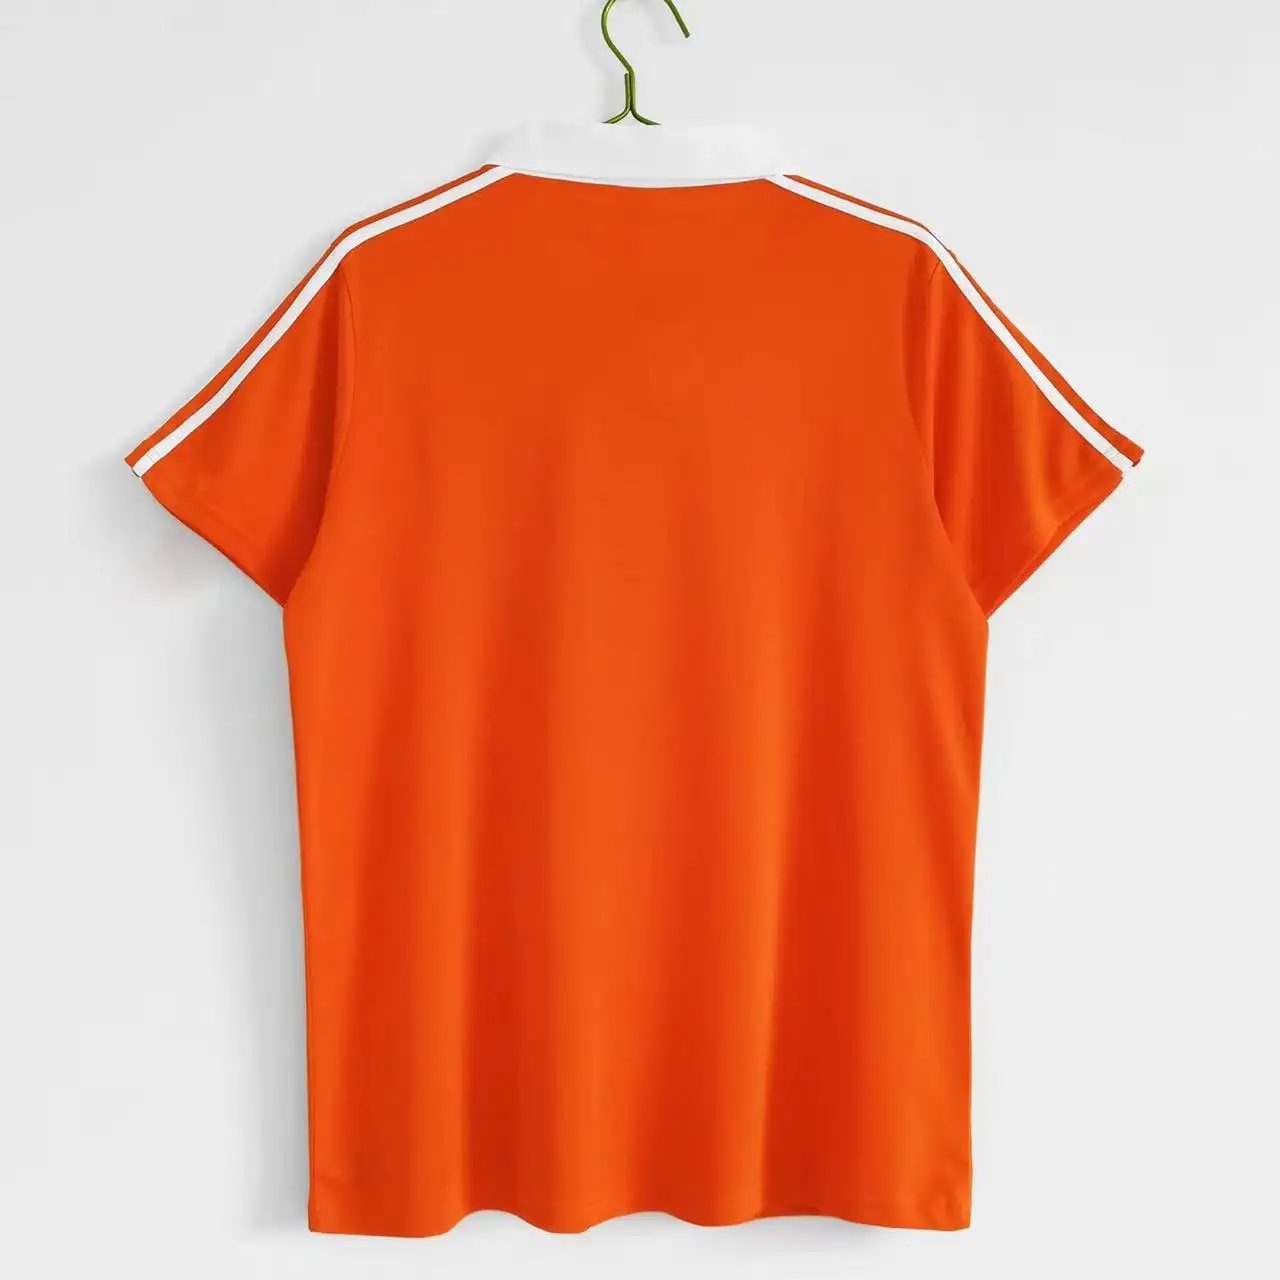 1990 Retro futbol forması turuncu Retro futbol tişörtü özel isim ücretsiz ulaşım hollanda